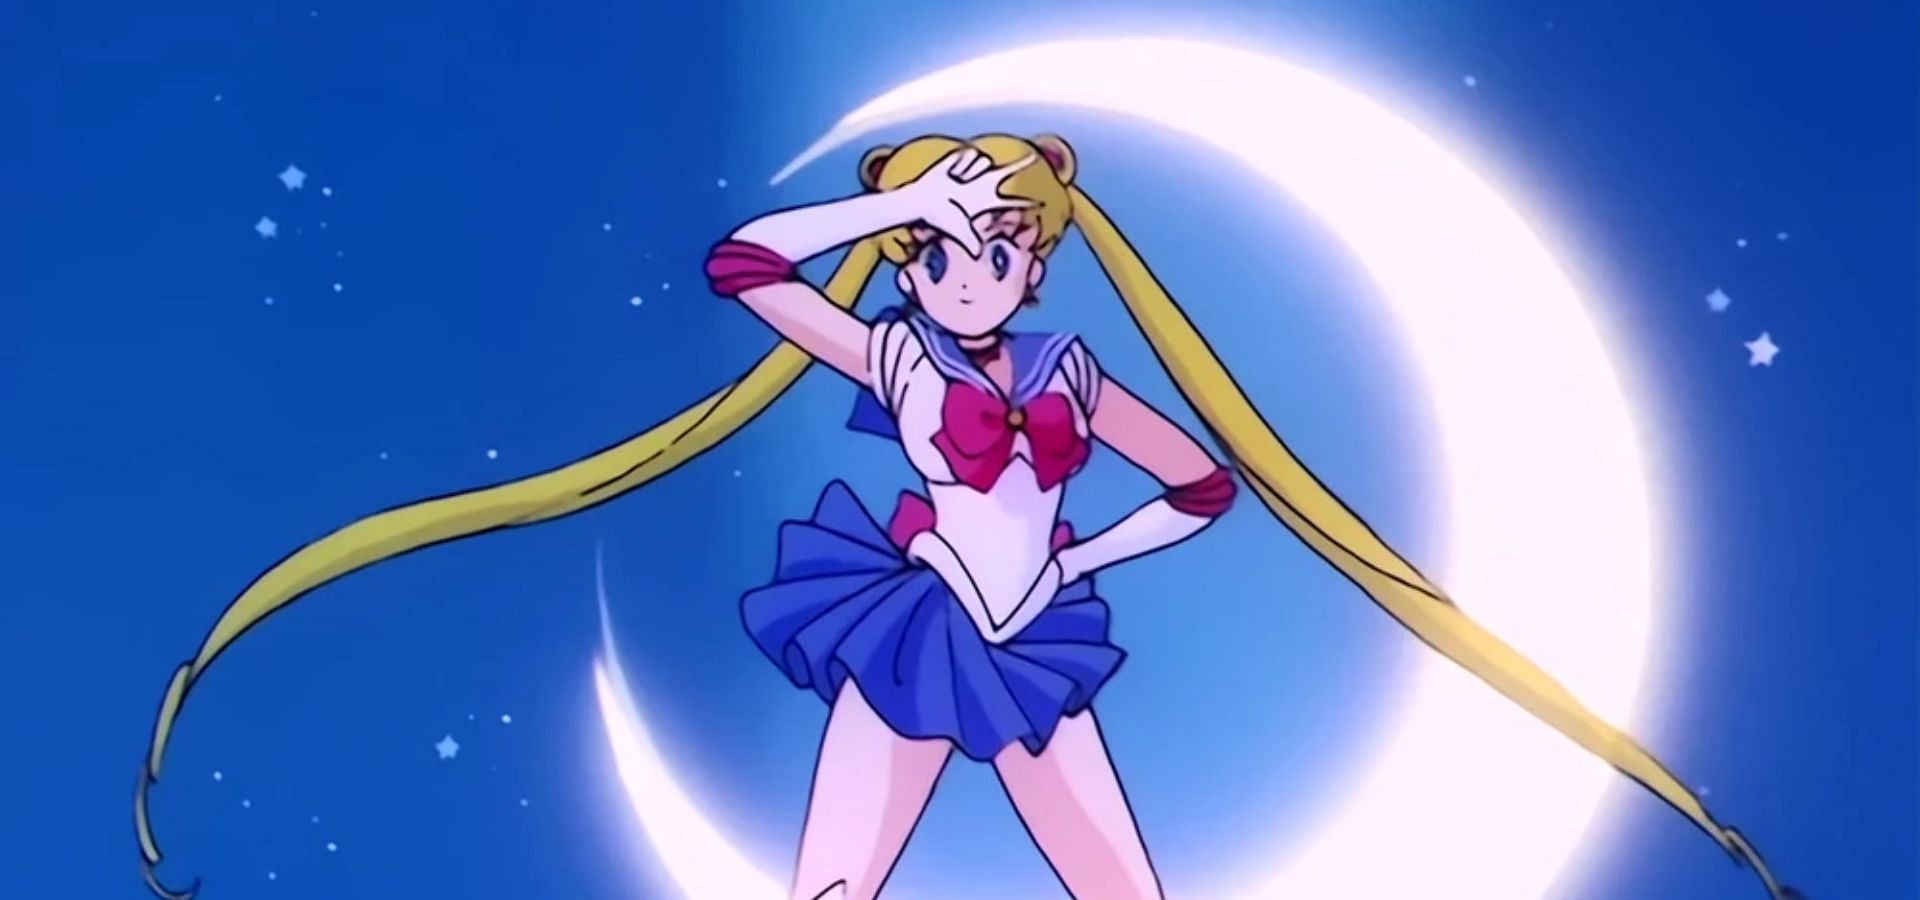 Usagi Tsukino from Sailor Moon (image via Toei Animation )